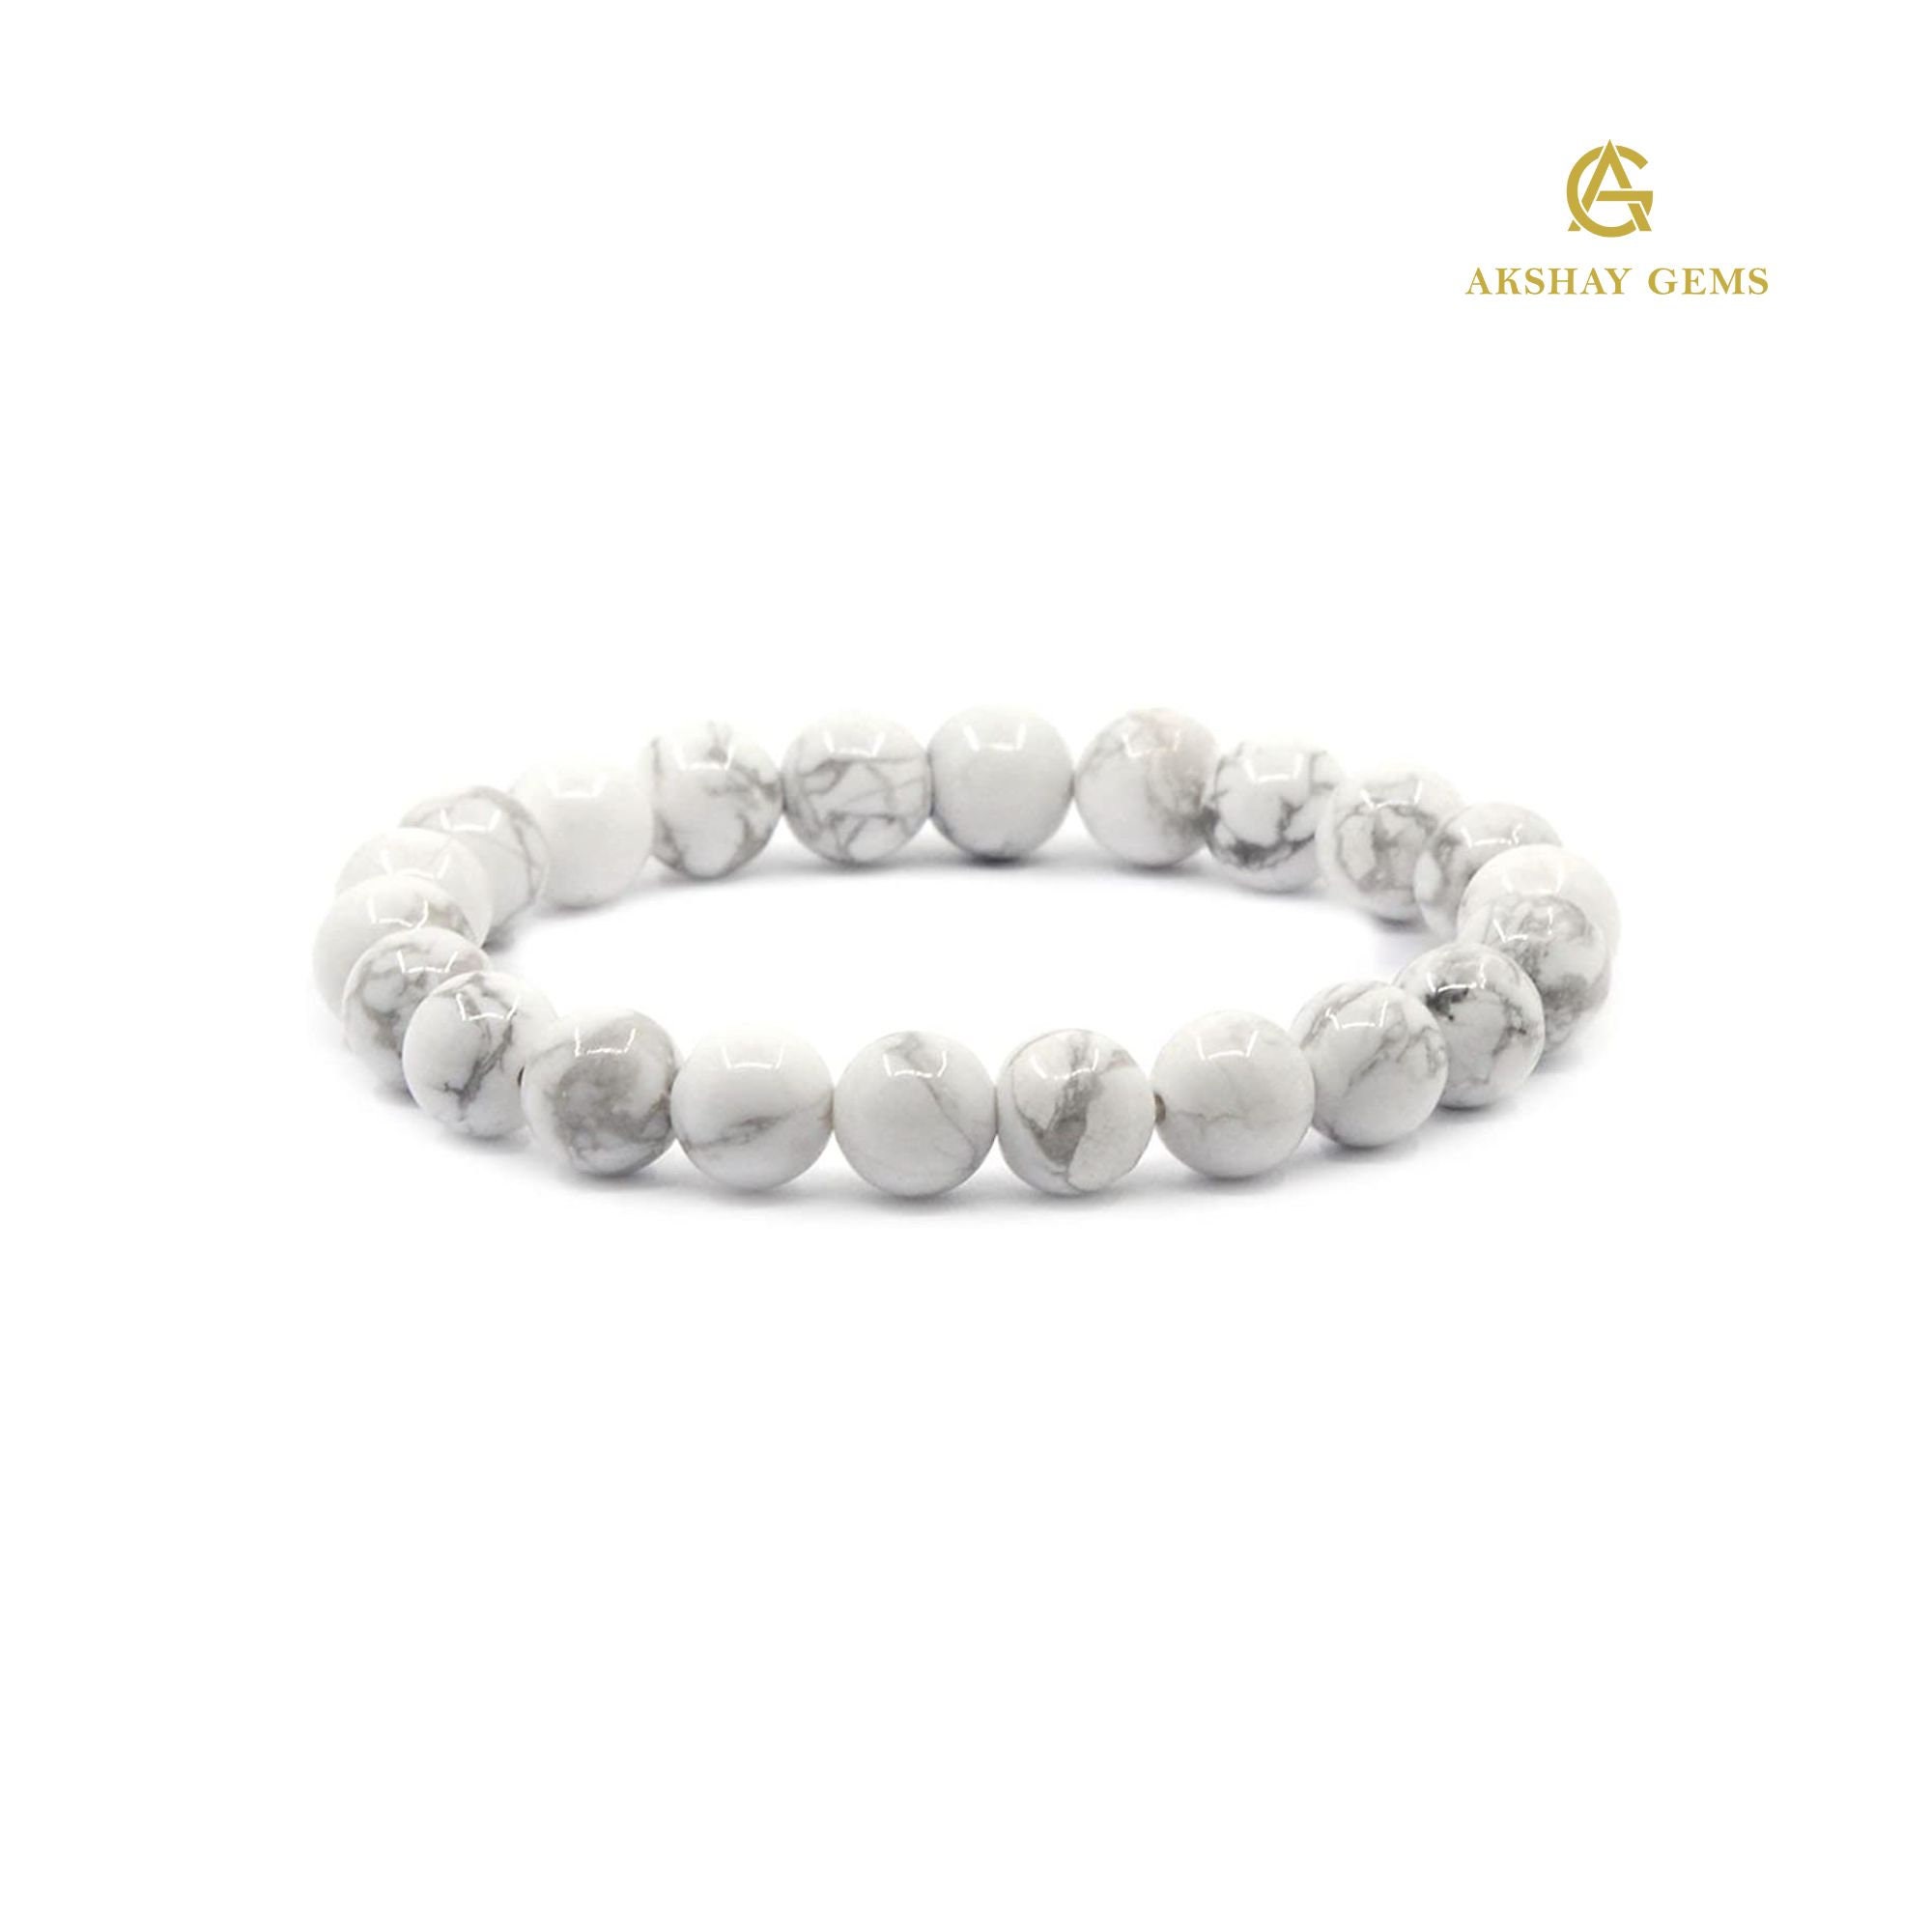 Grade A++ White Howlite Crystal Bead Bracelet 8mm, Genuine Gemstone Bracelet  | eBay